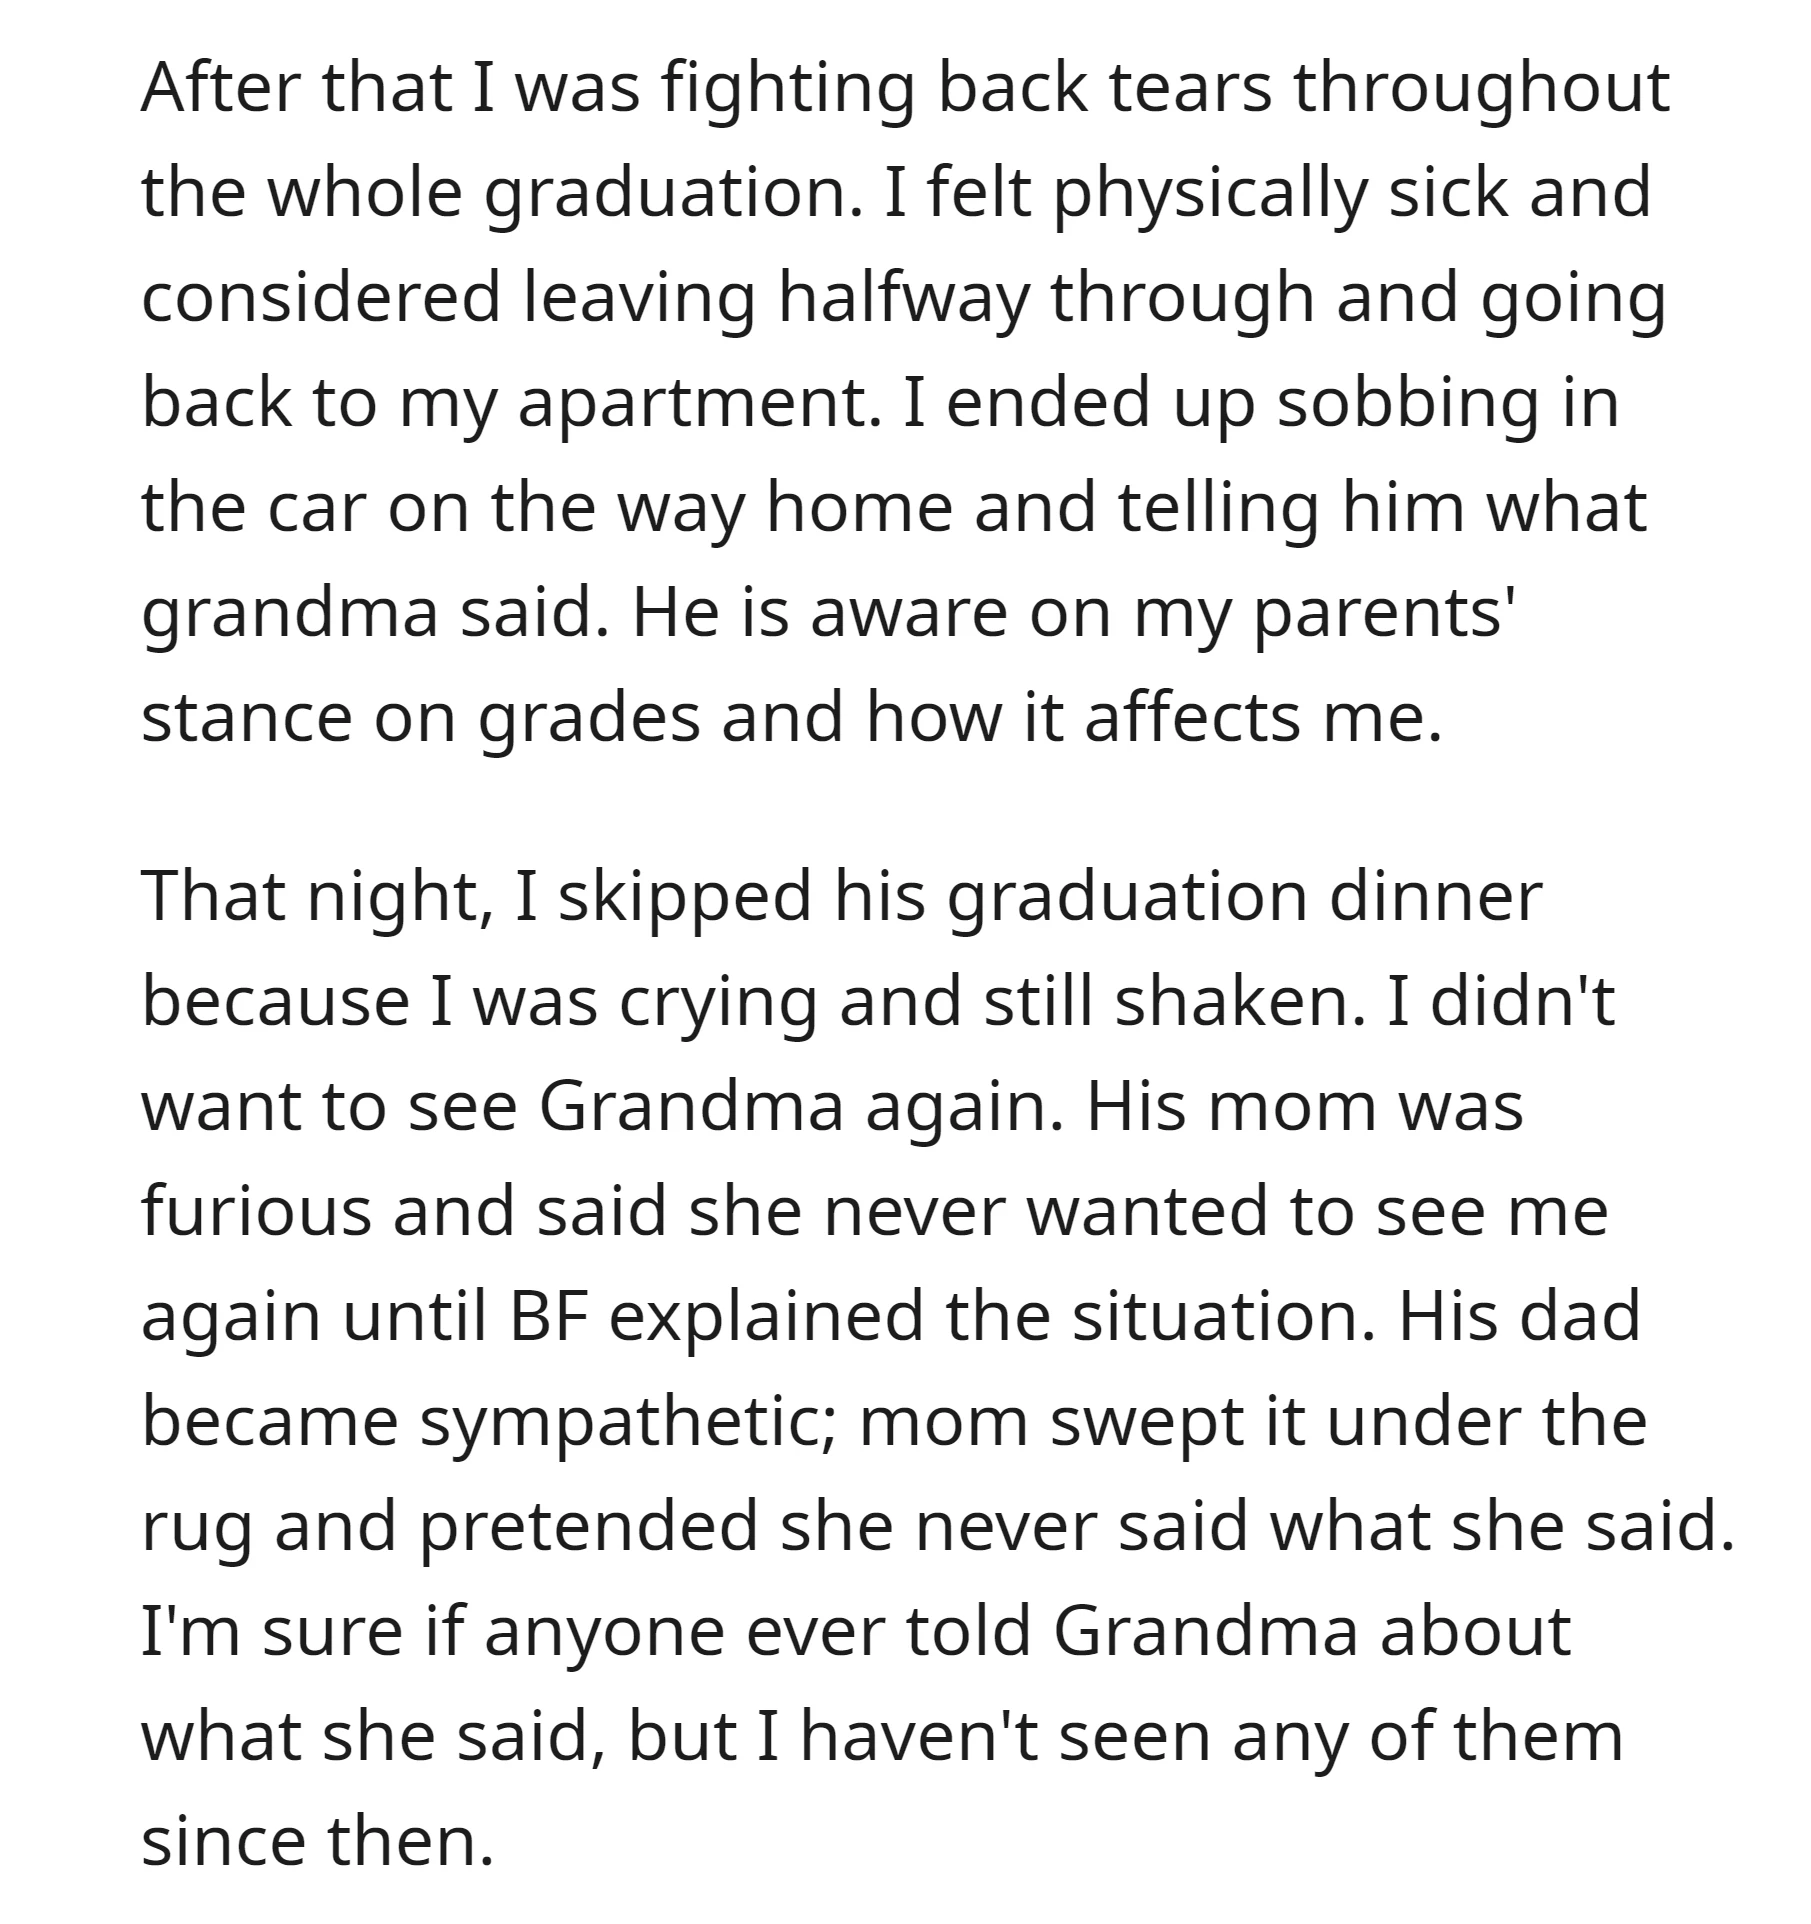 OP fought back tears throughout her boyfriend's graduation